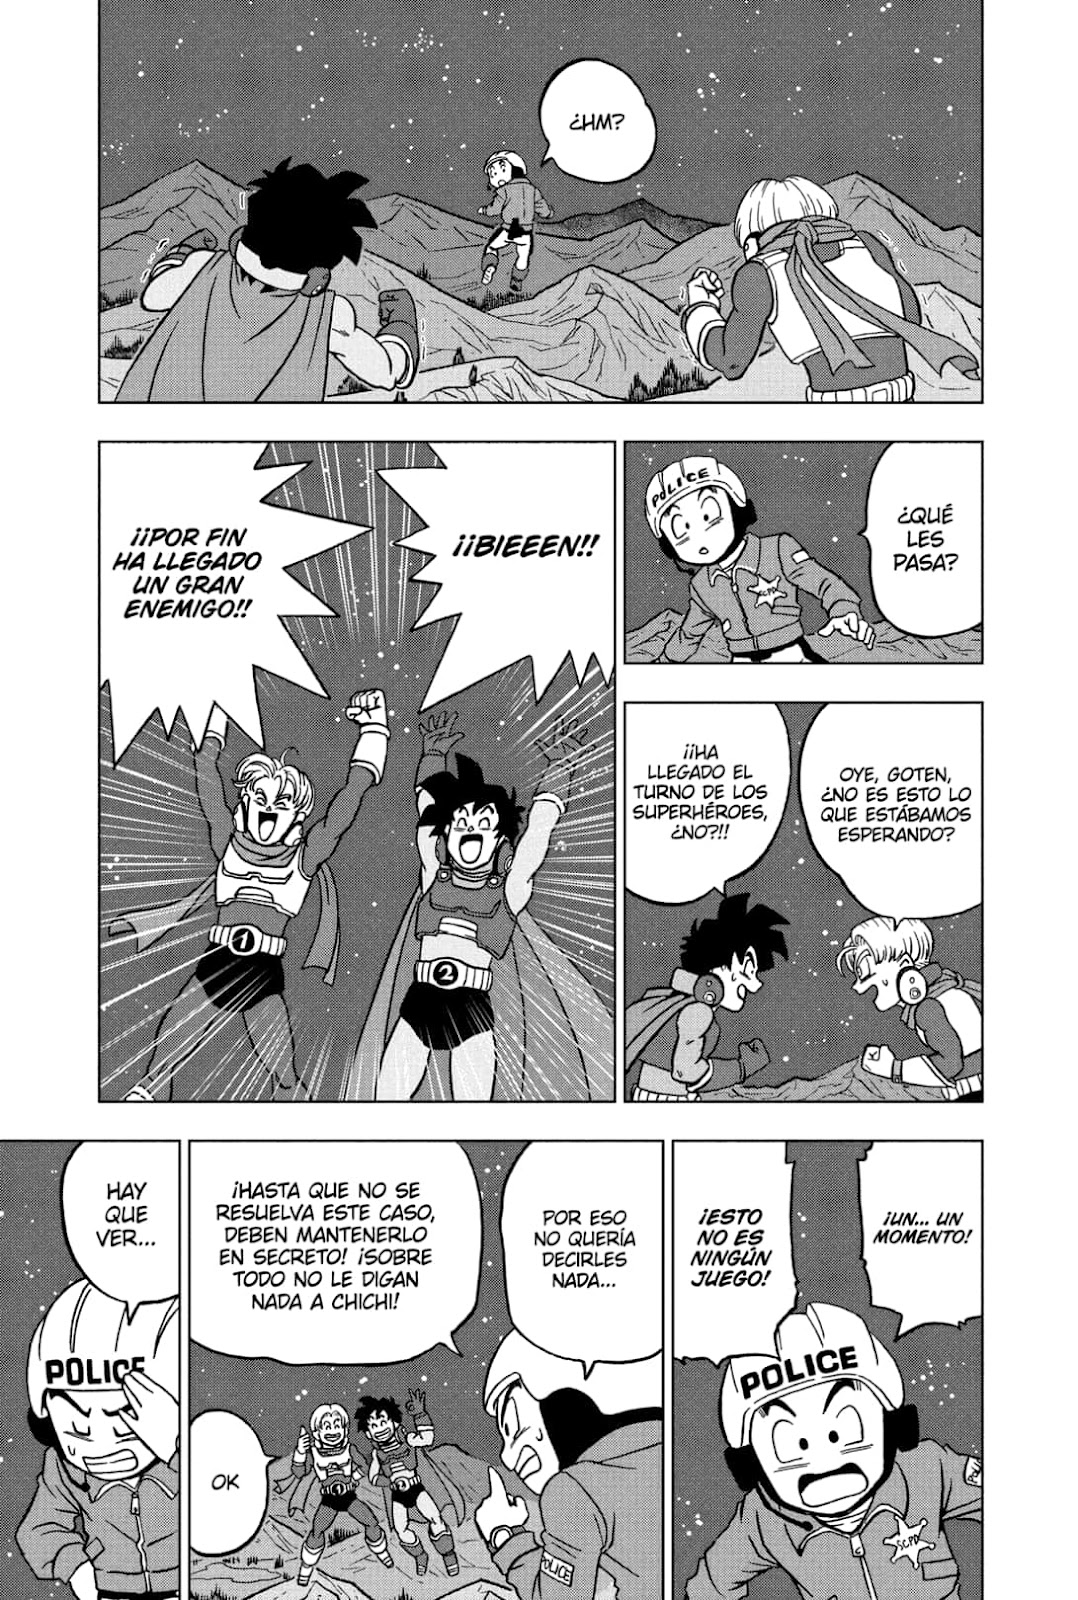 Leer Dragon Ball Super Manga Capitulo 90 en Español Gratis Online